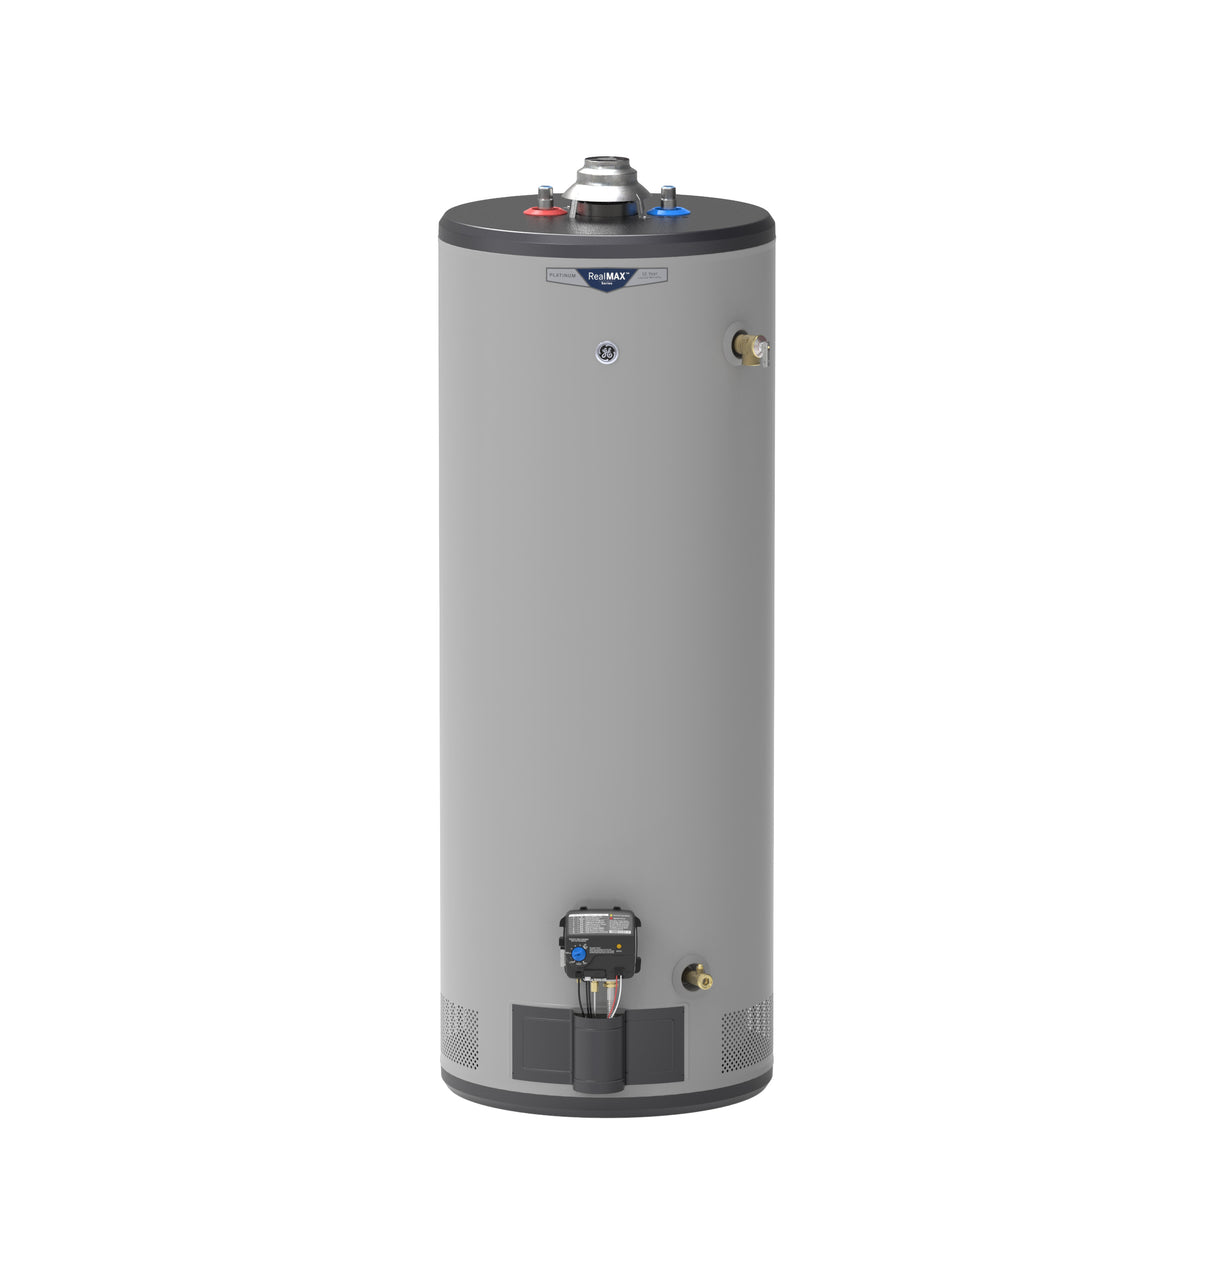 GE RealMAX Platinum 50-Gallon Tall Liquid Propane Atmospheric Water Heater - (GP50T12BXR)